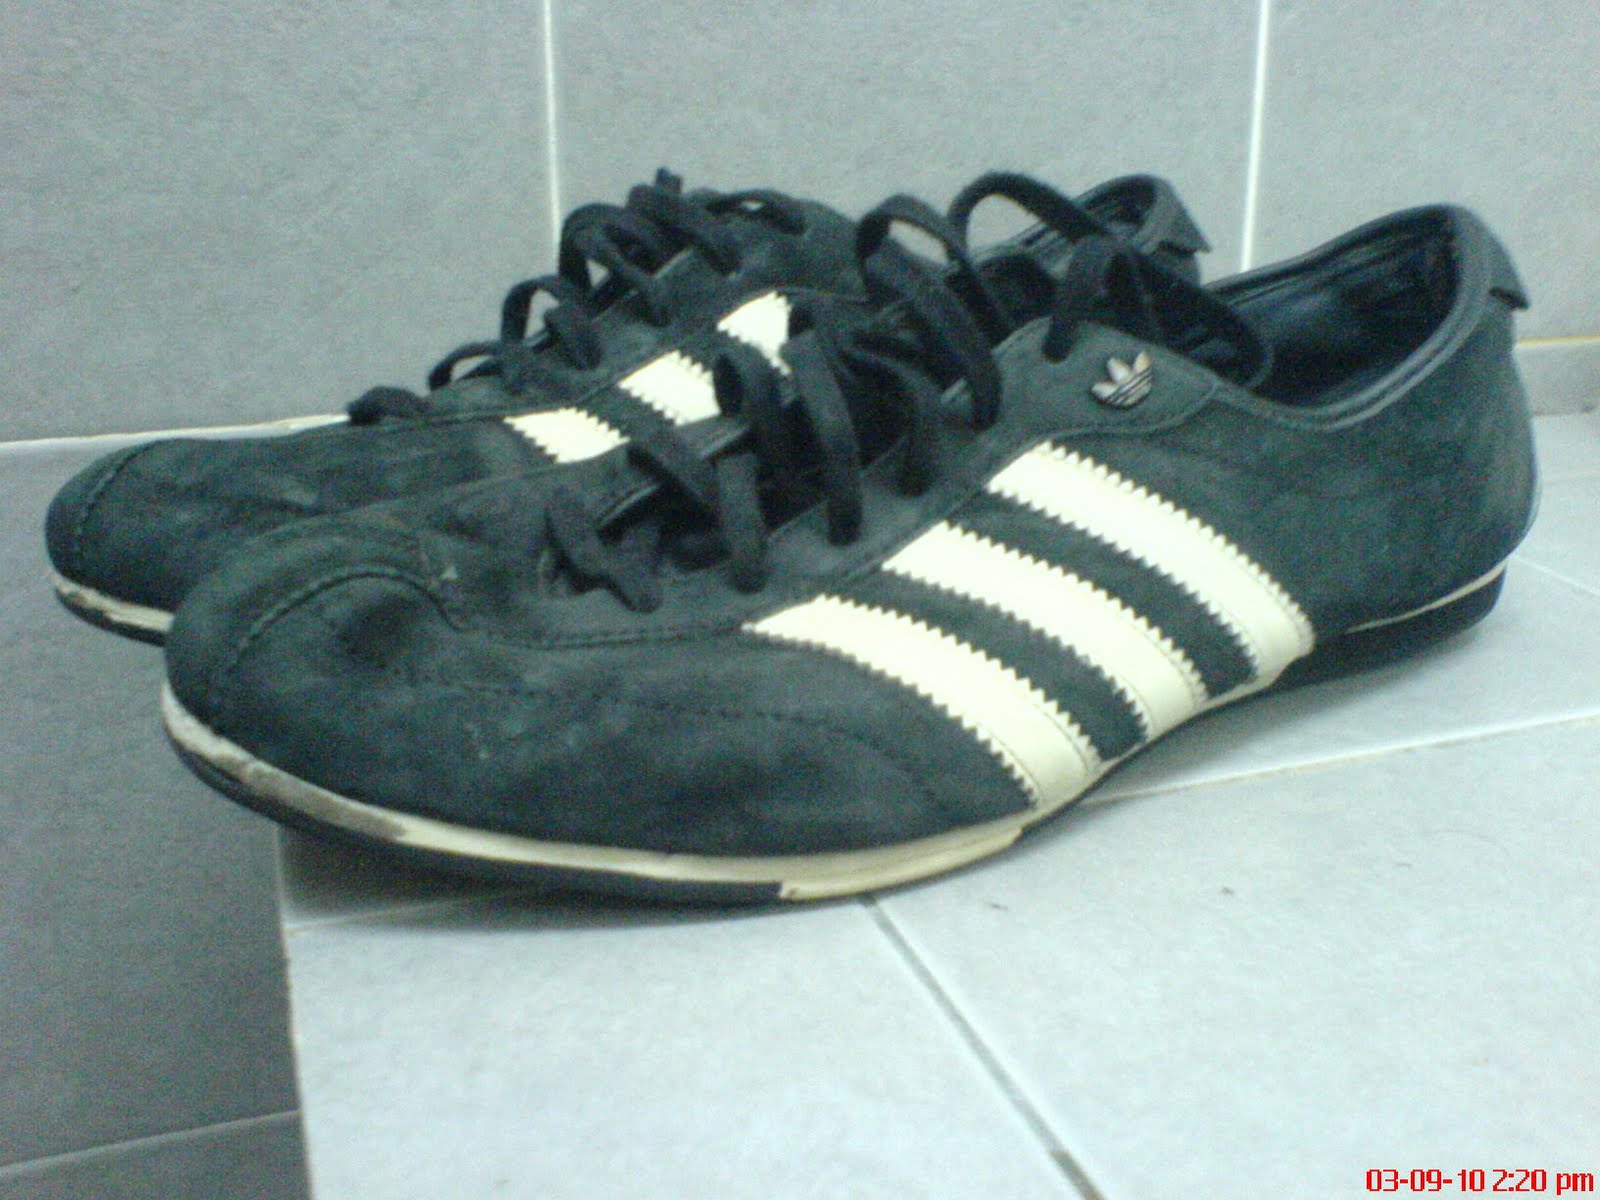 PLANET VINTAGE: Adidas shoes size 7 1/2 uk (SOLD)